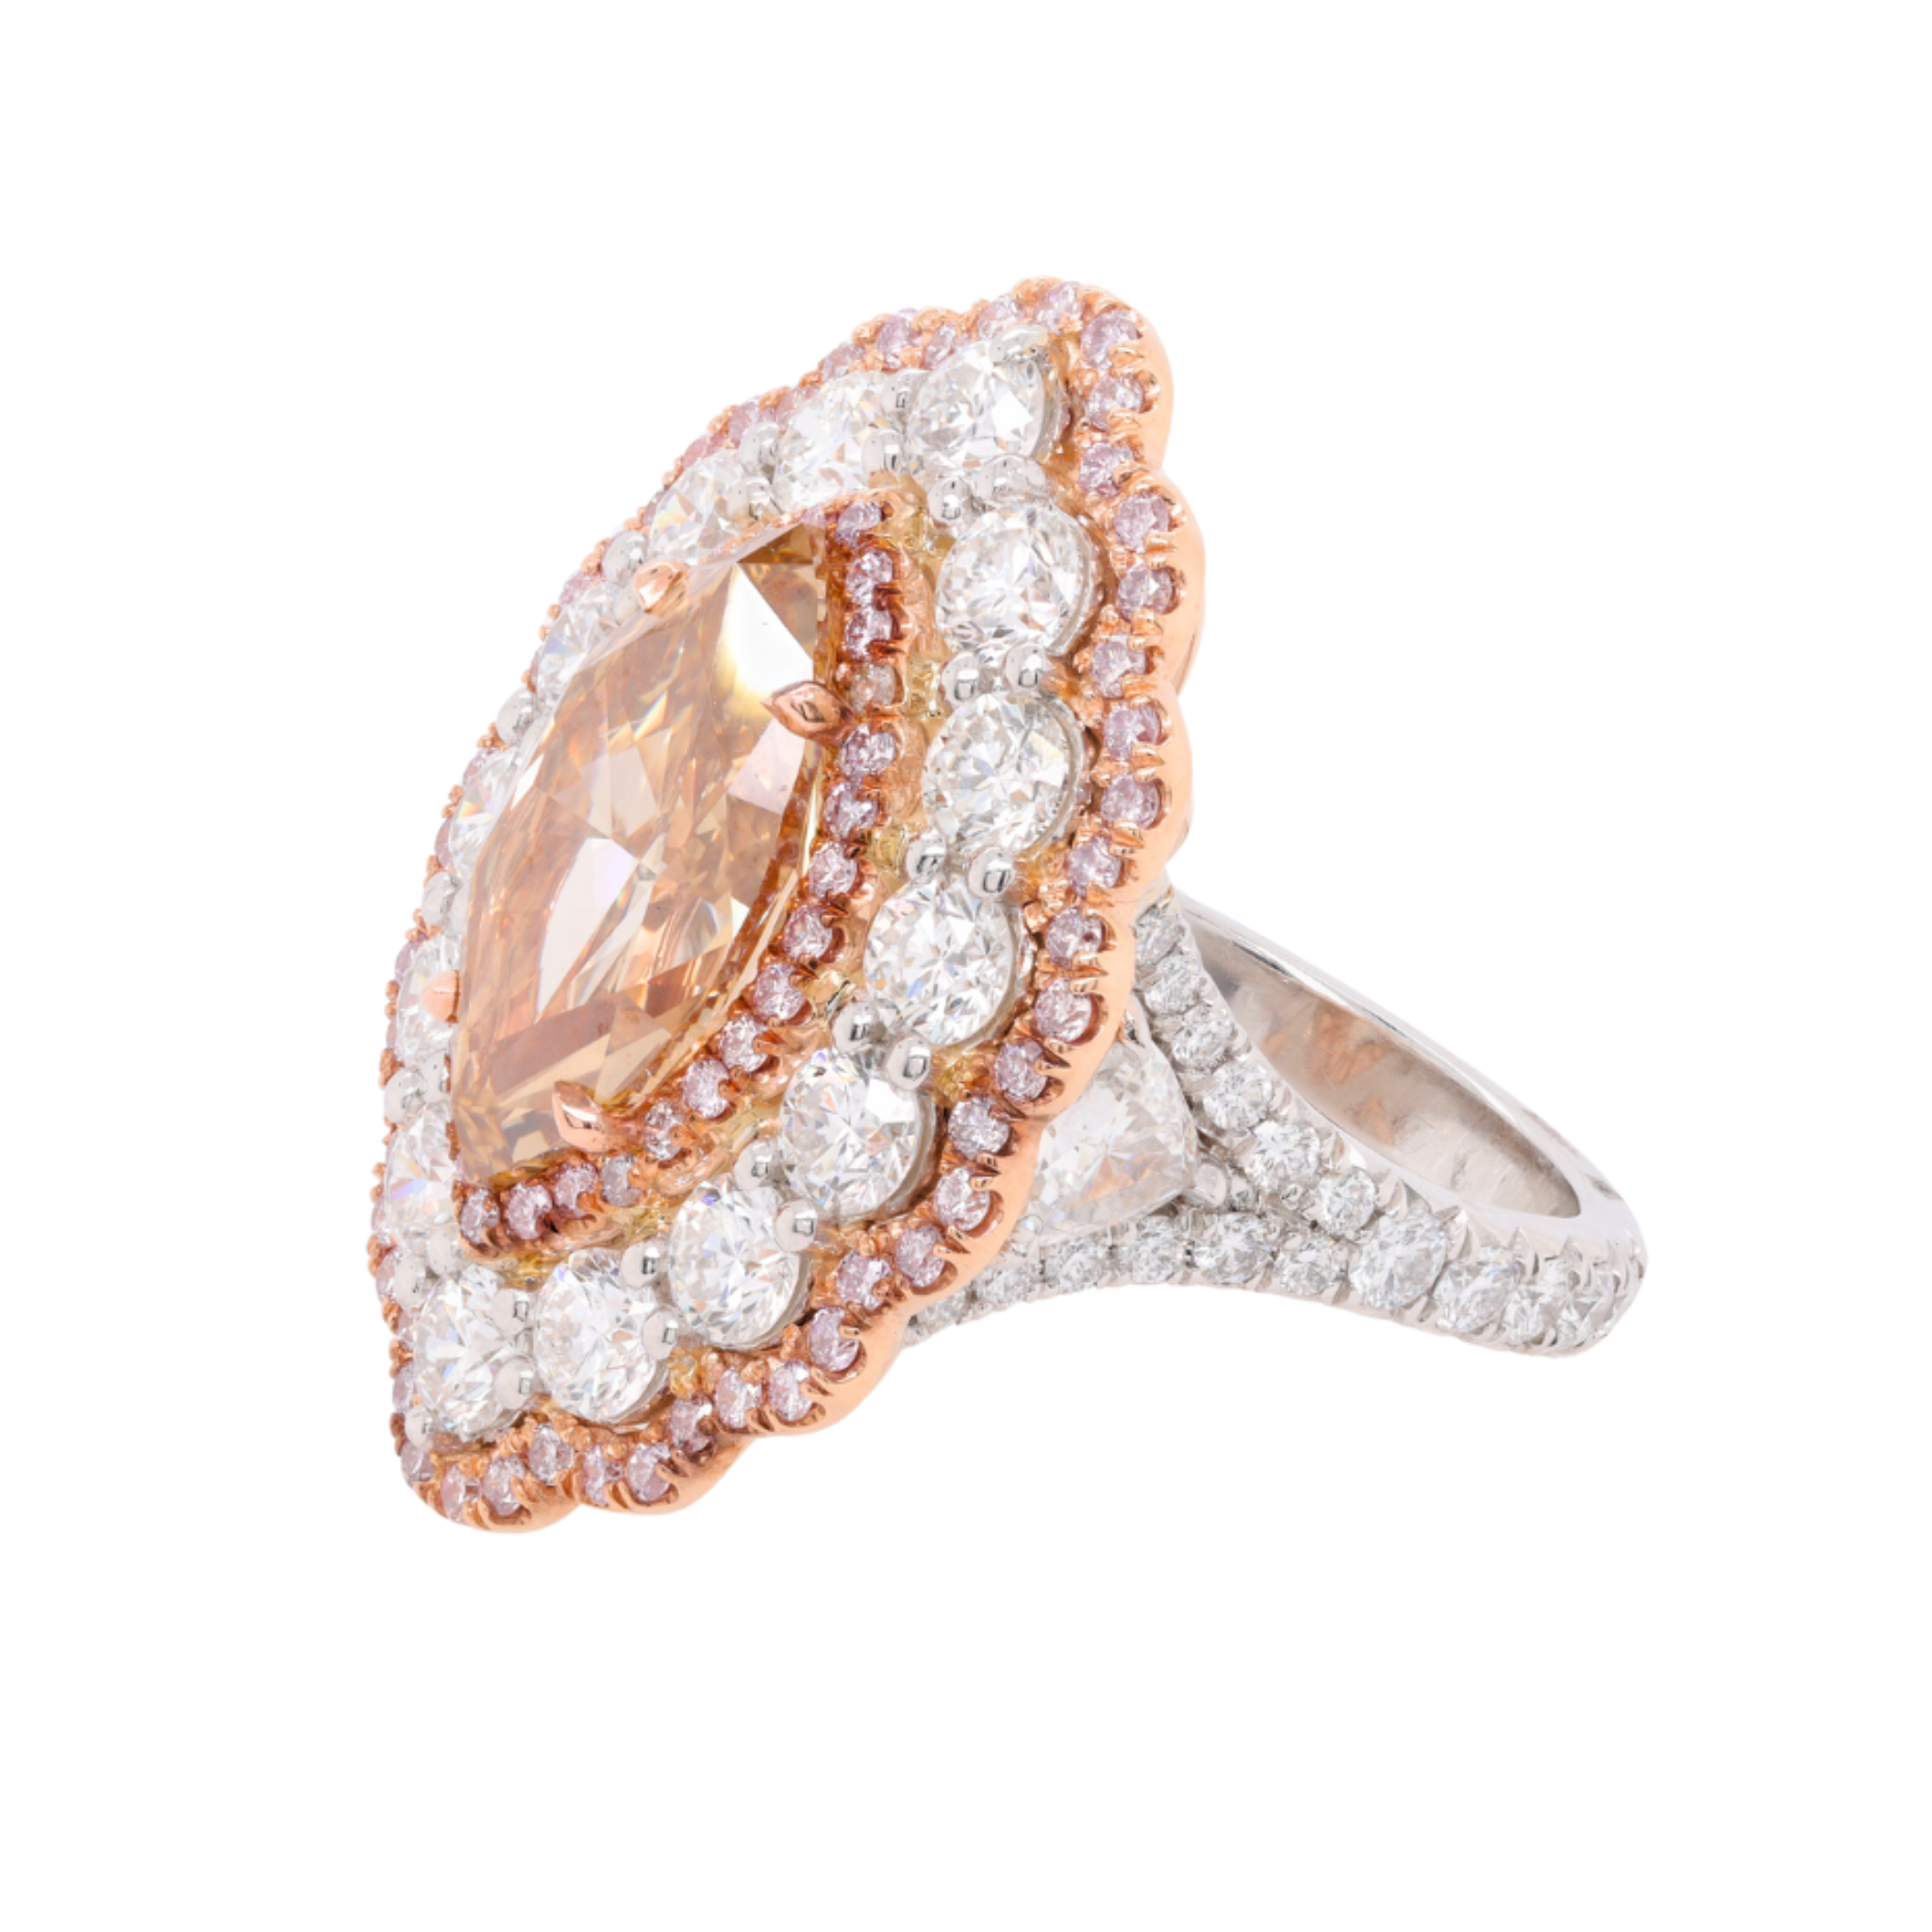 5.03ct Brown Marquise Diamond Ring.jpg